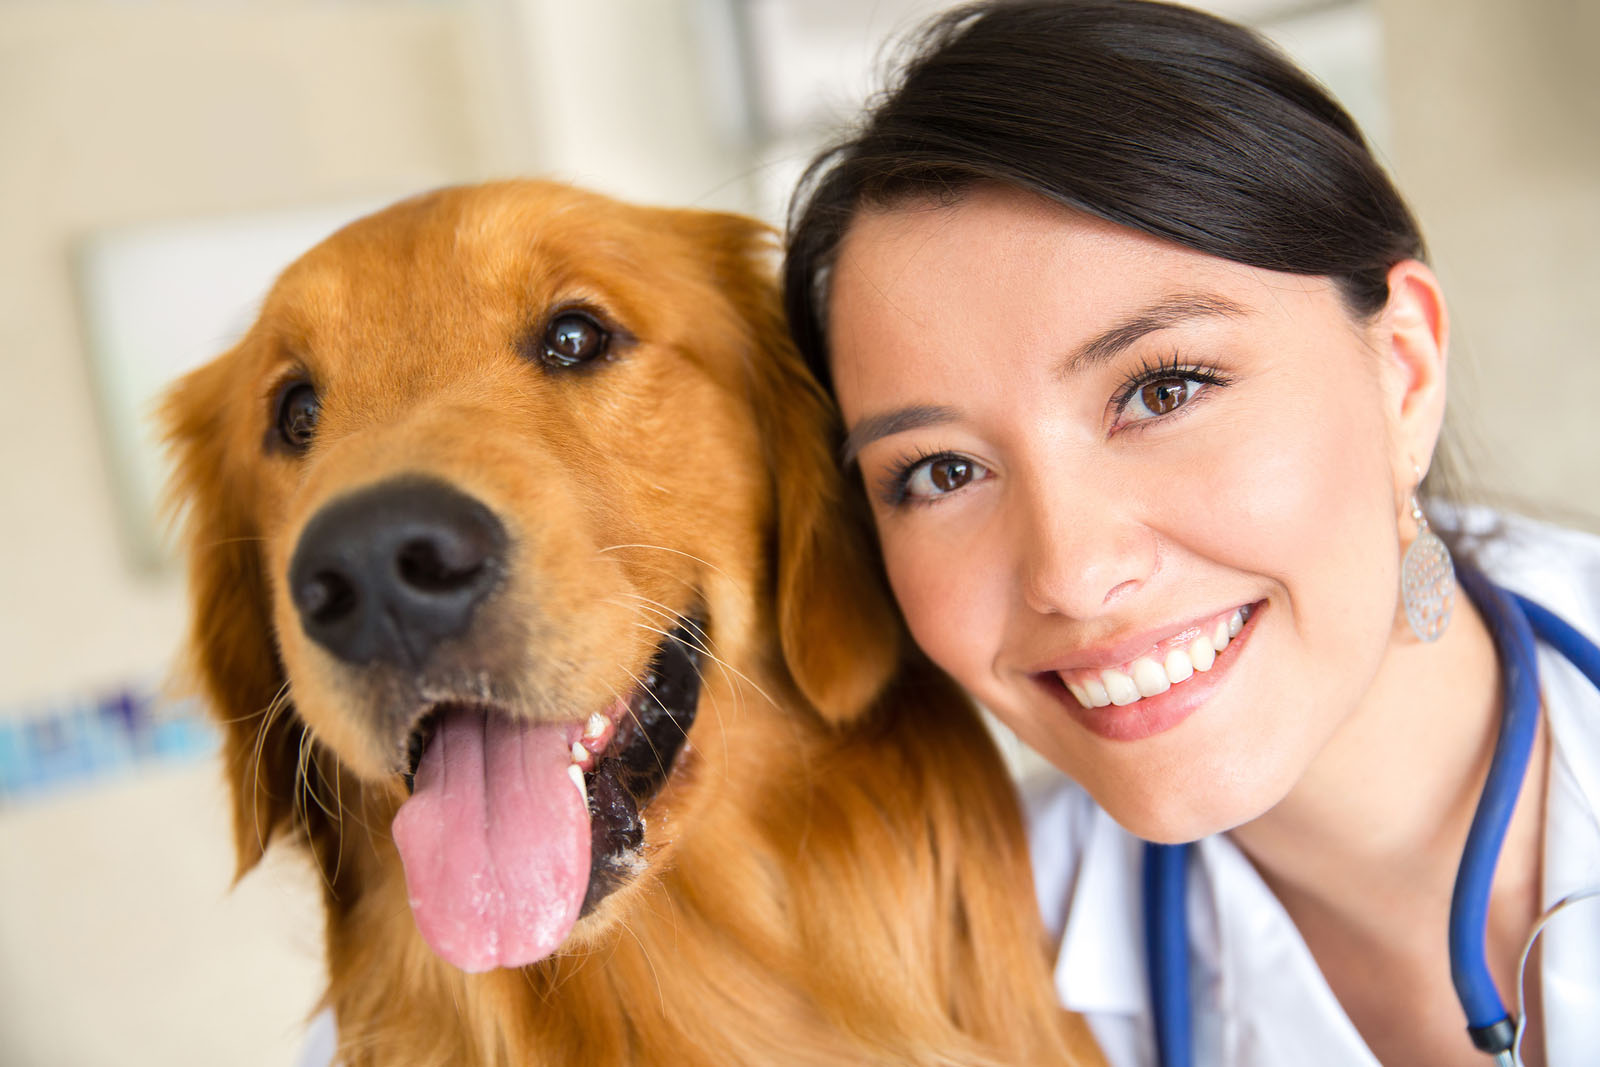 pet wellness exam faq from your veterinarian in brooklyn